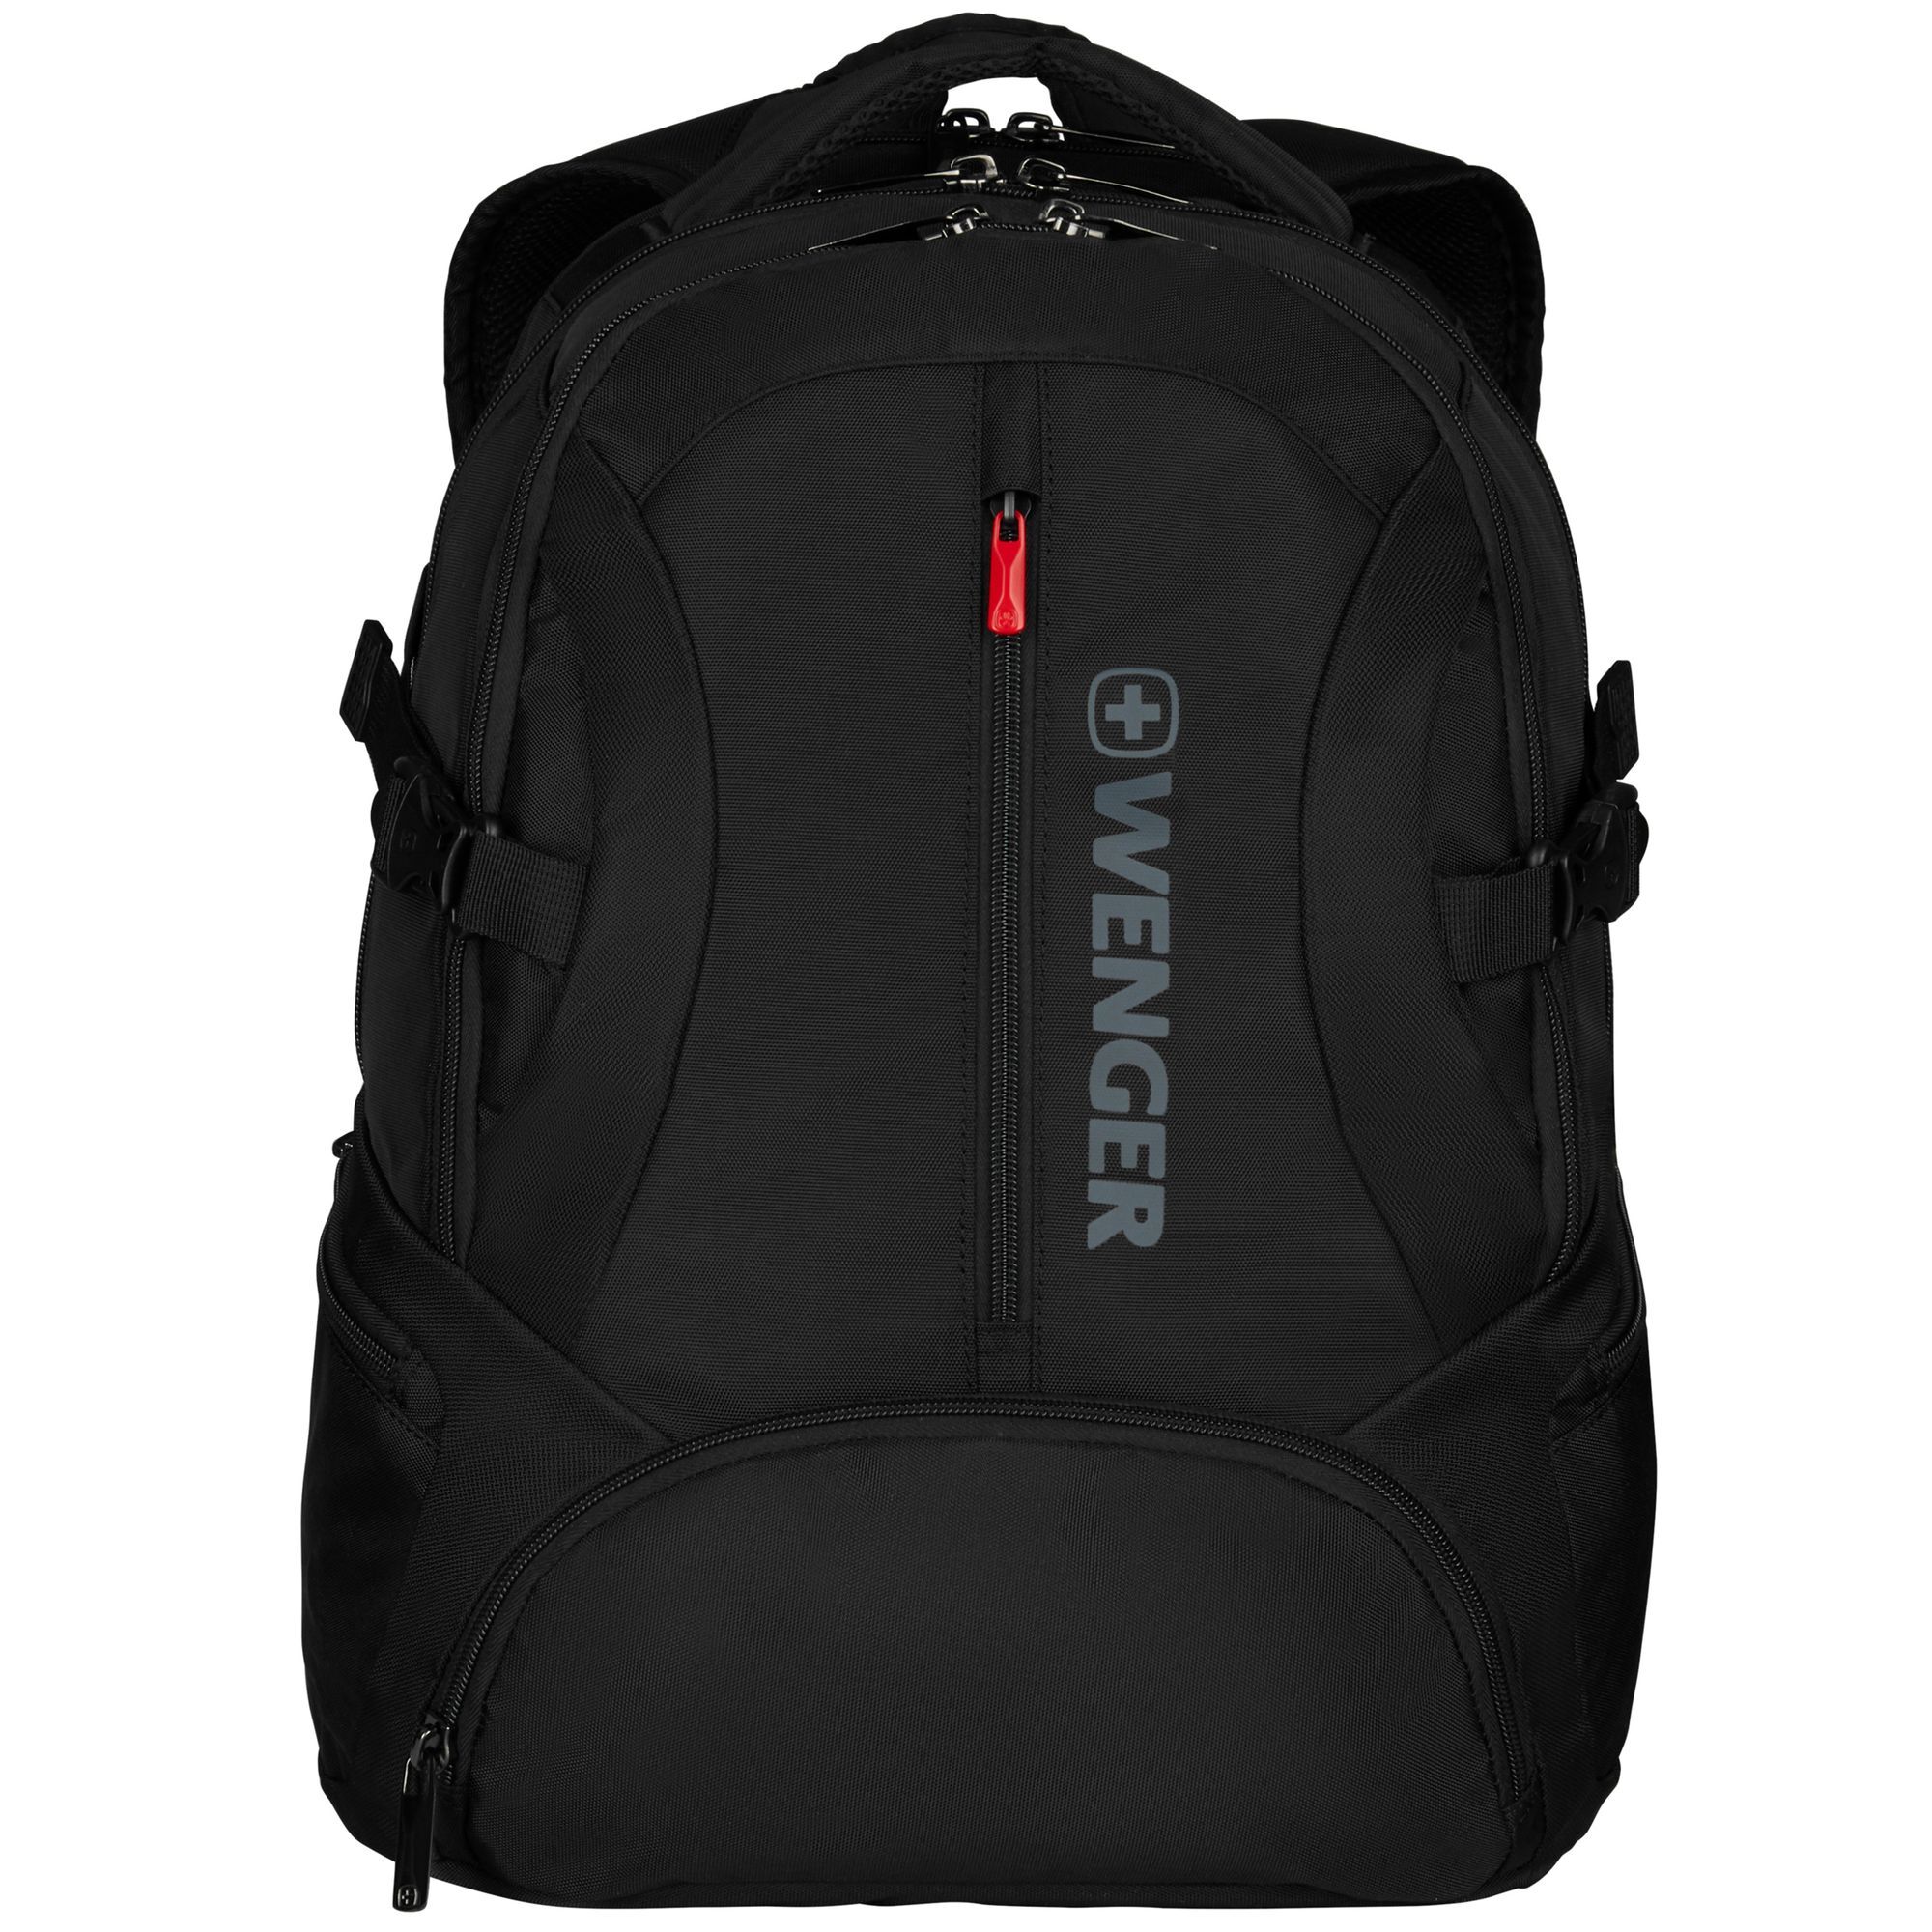 Рюкзак Wenger Transit 16 46 cm Laptopfach, черный рюкзак wenger crango 46 cm laptopfach цвет gravity black